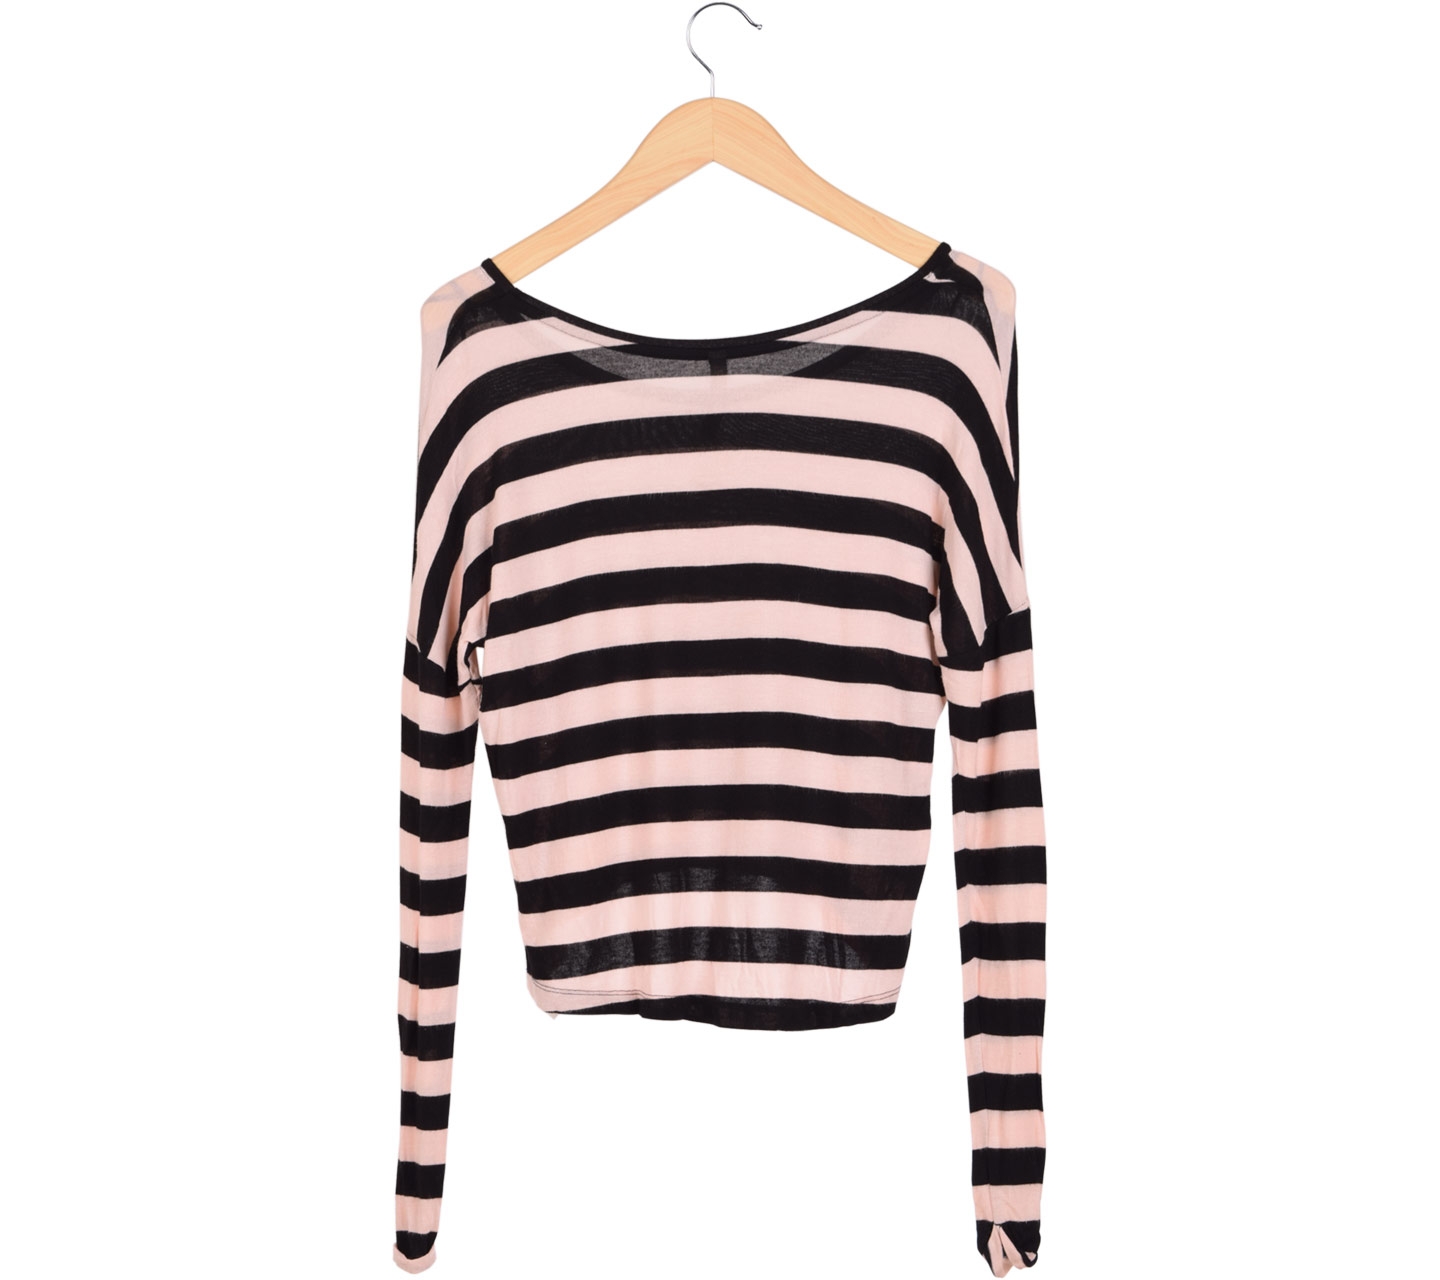 Stradivarius Black and Pink Striped T-Shirt